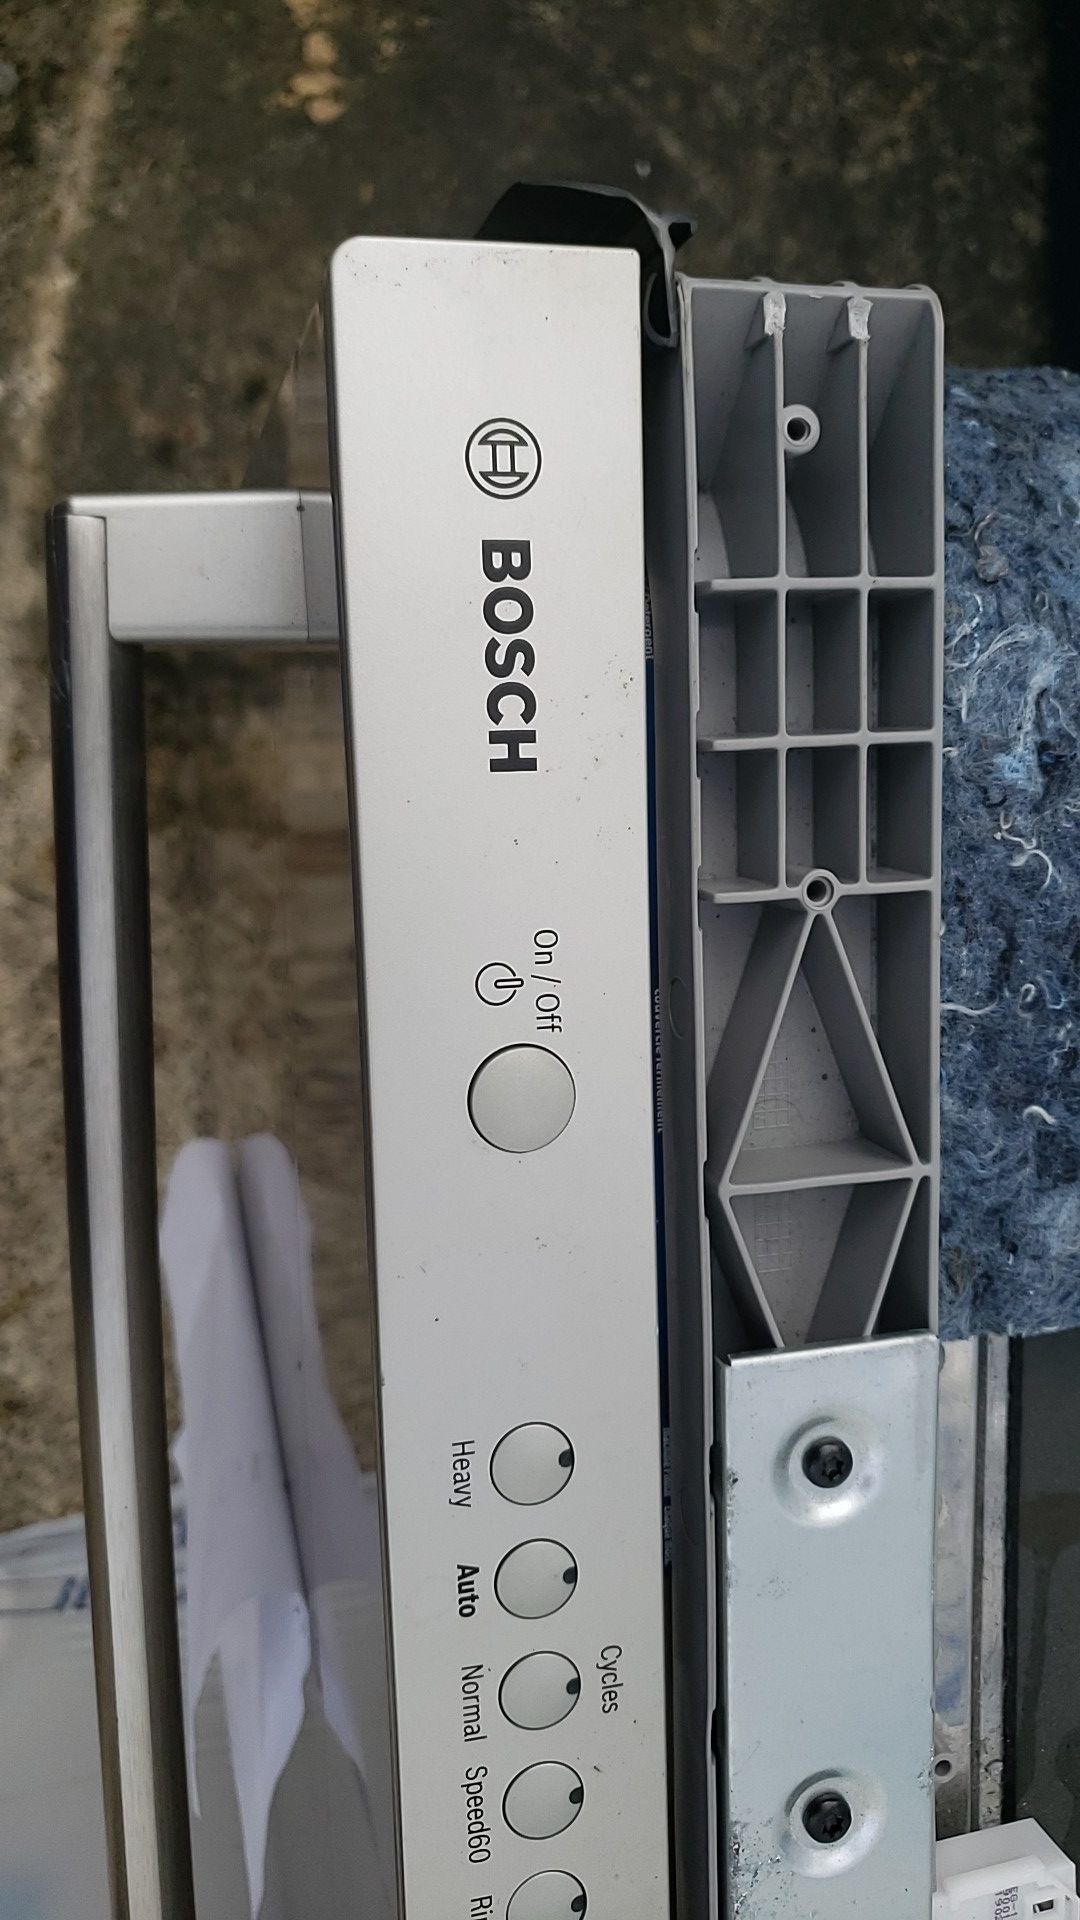 Bosch dishwasher never used